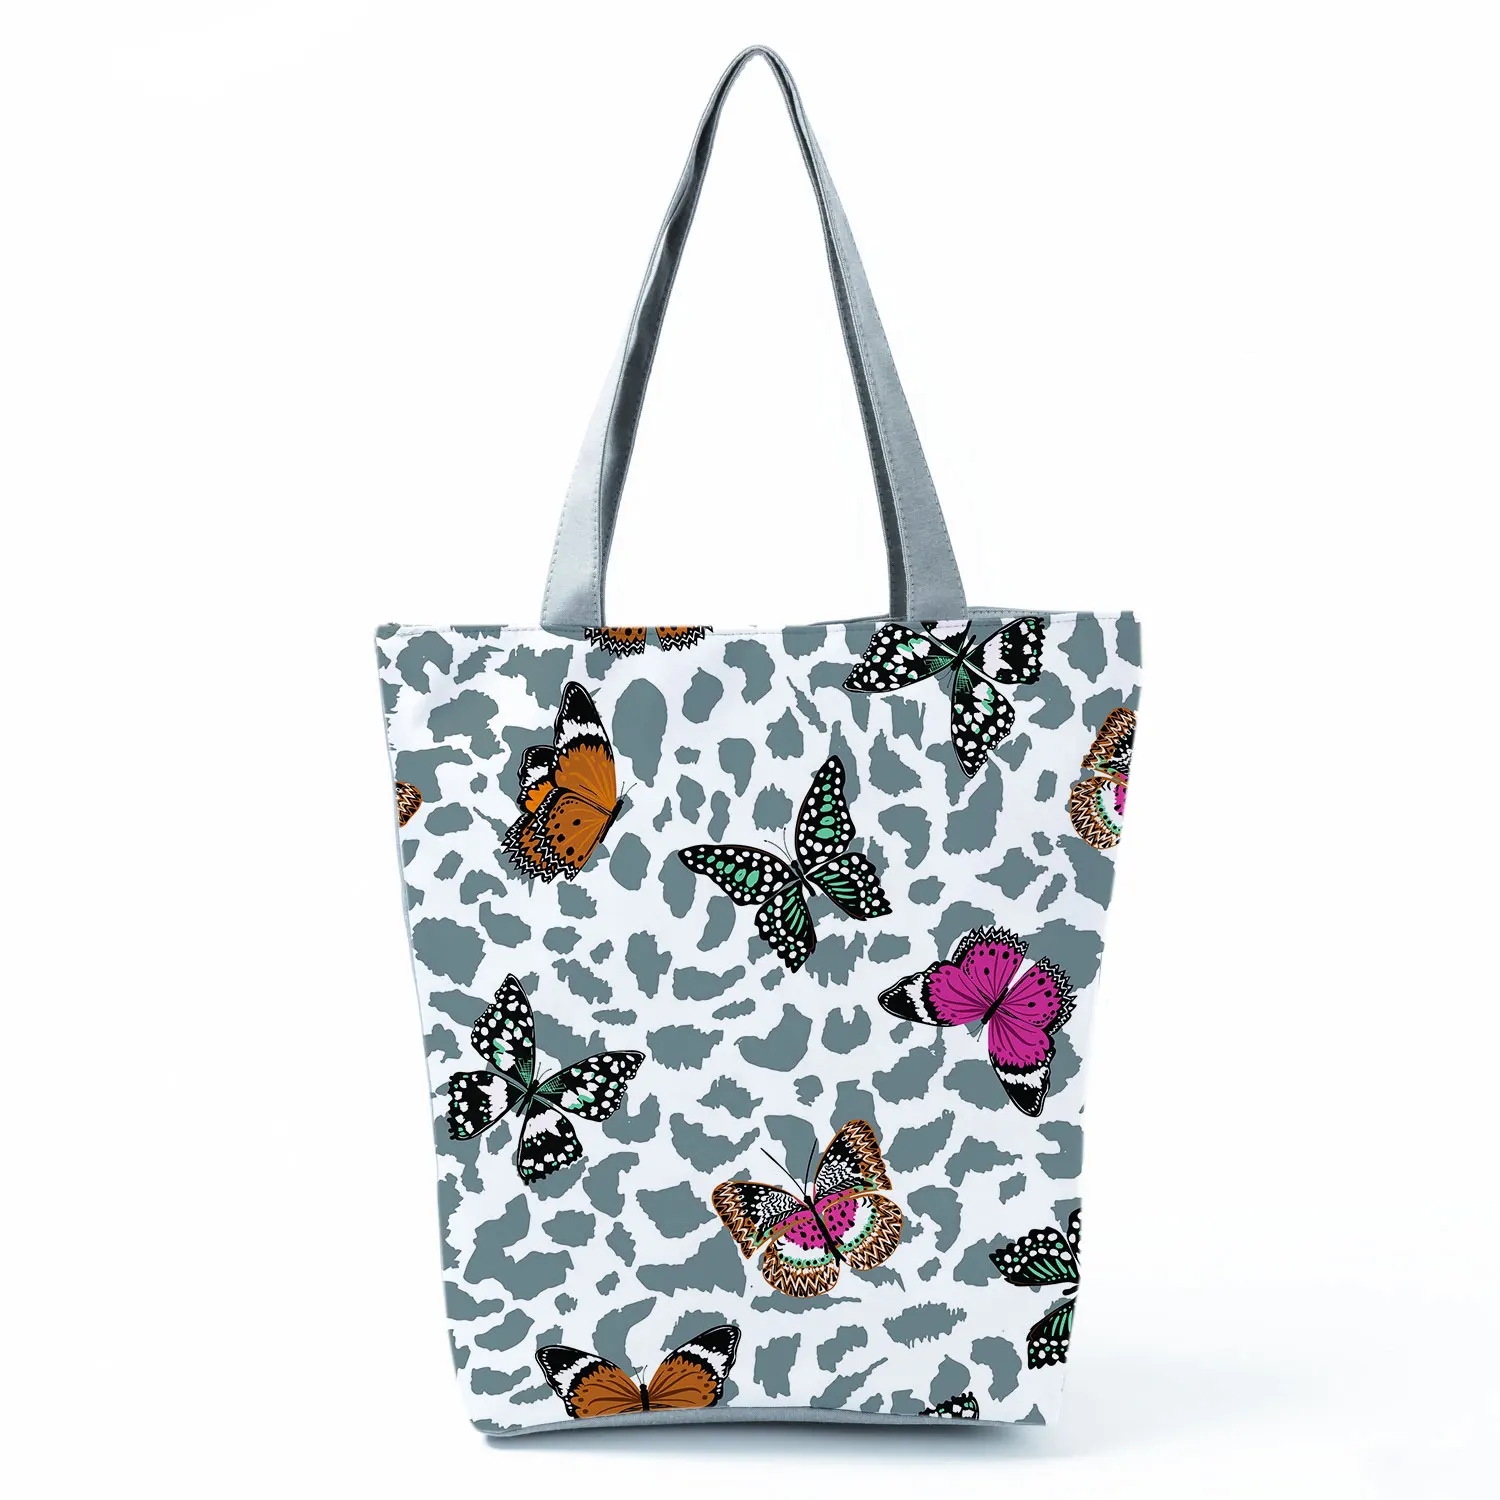 Butterfly Printed Fashion Handbags Animal Portable High Capacity Foldable Shopping Bag Eco Friendly Hot Sale Women Shoulder Bag backpack purse Totes